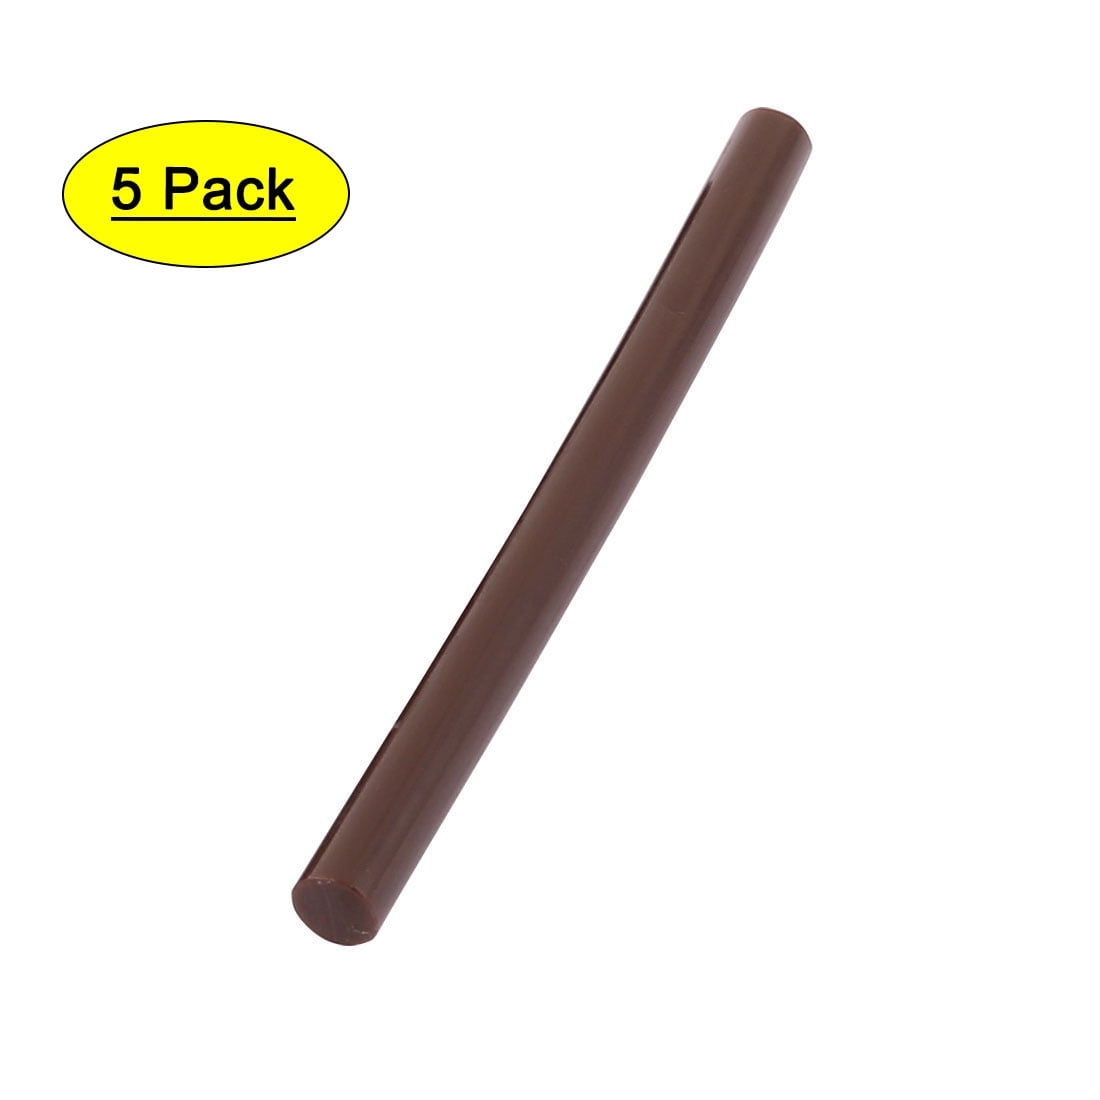 7mm Hot Melt Glue Sticks Translucent  Hot Melt Glue Adhesive Sticks -  10/50pcs 7mm - Aliexpress